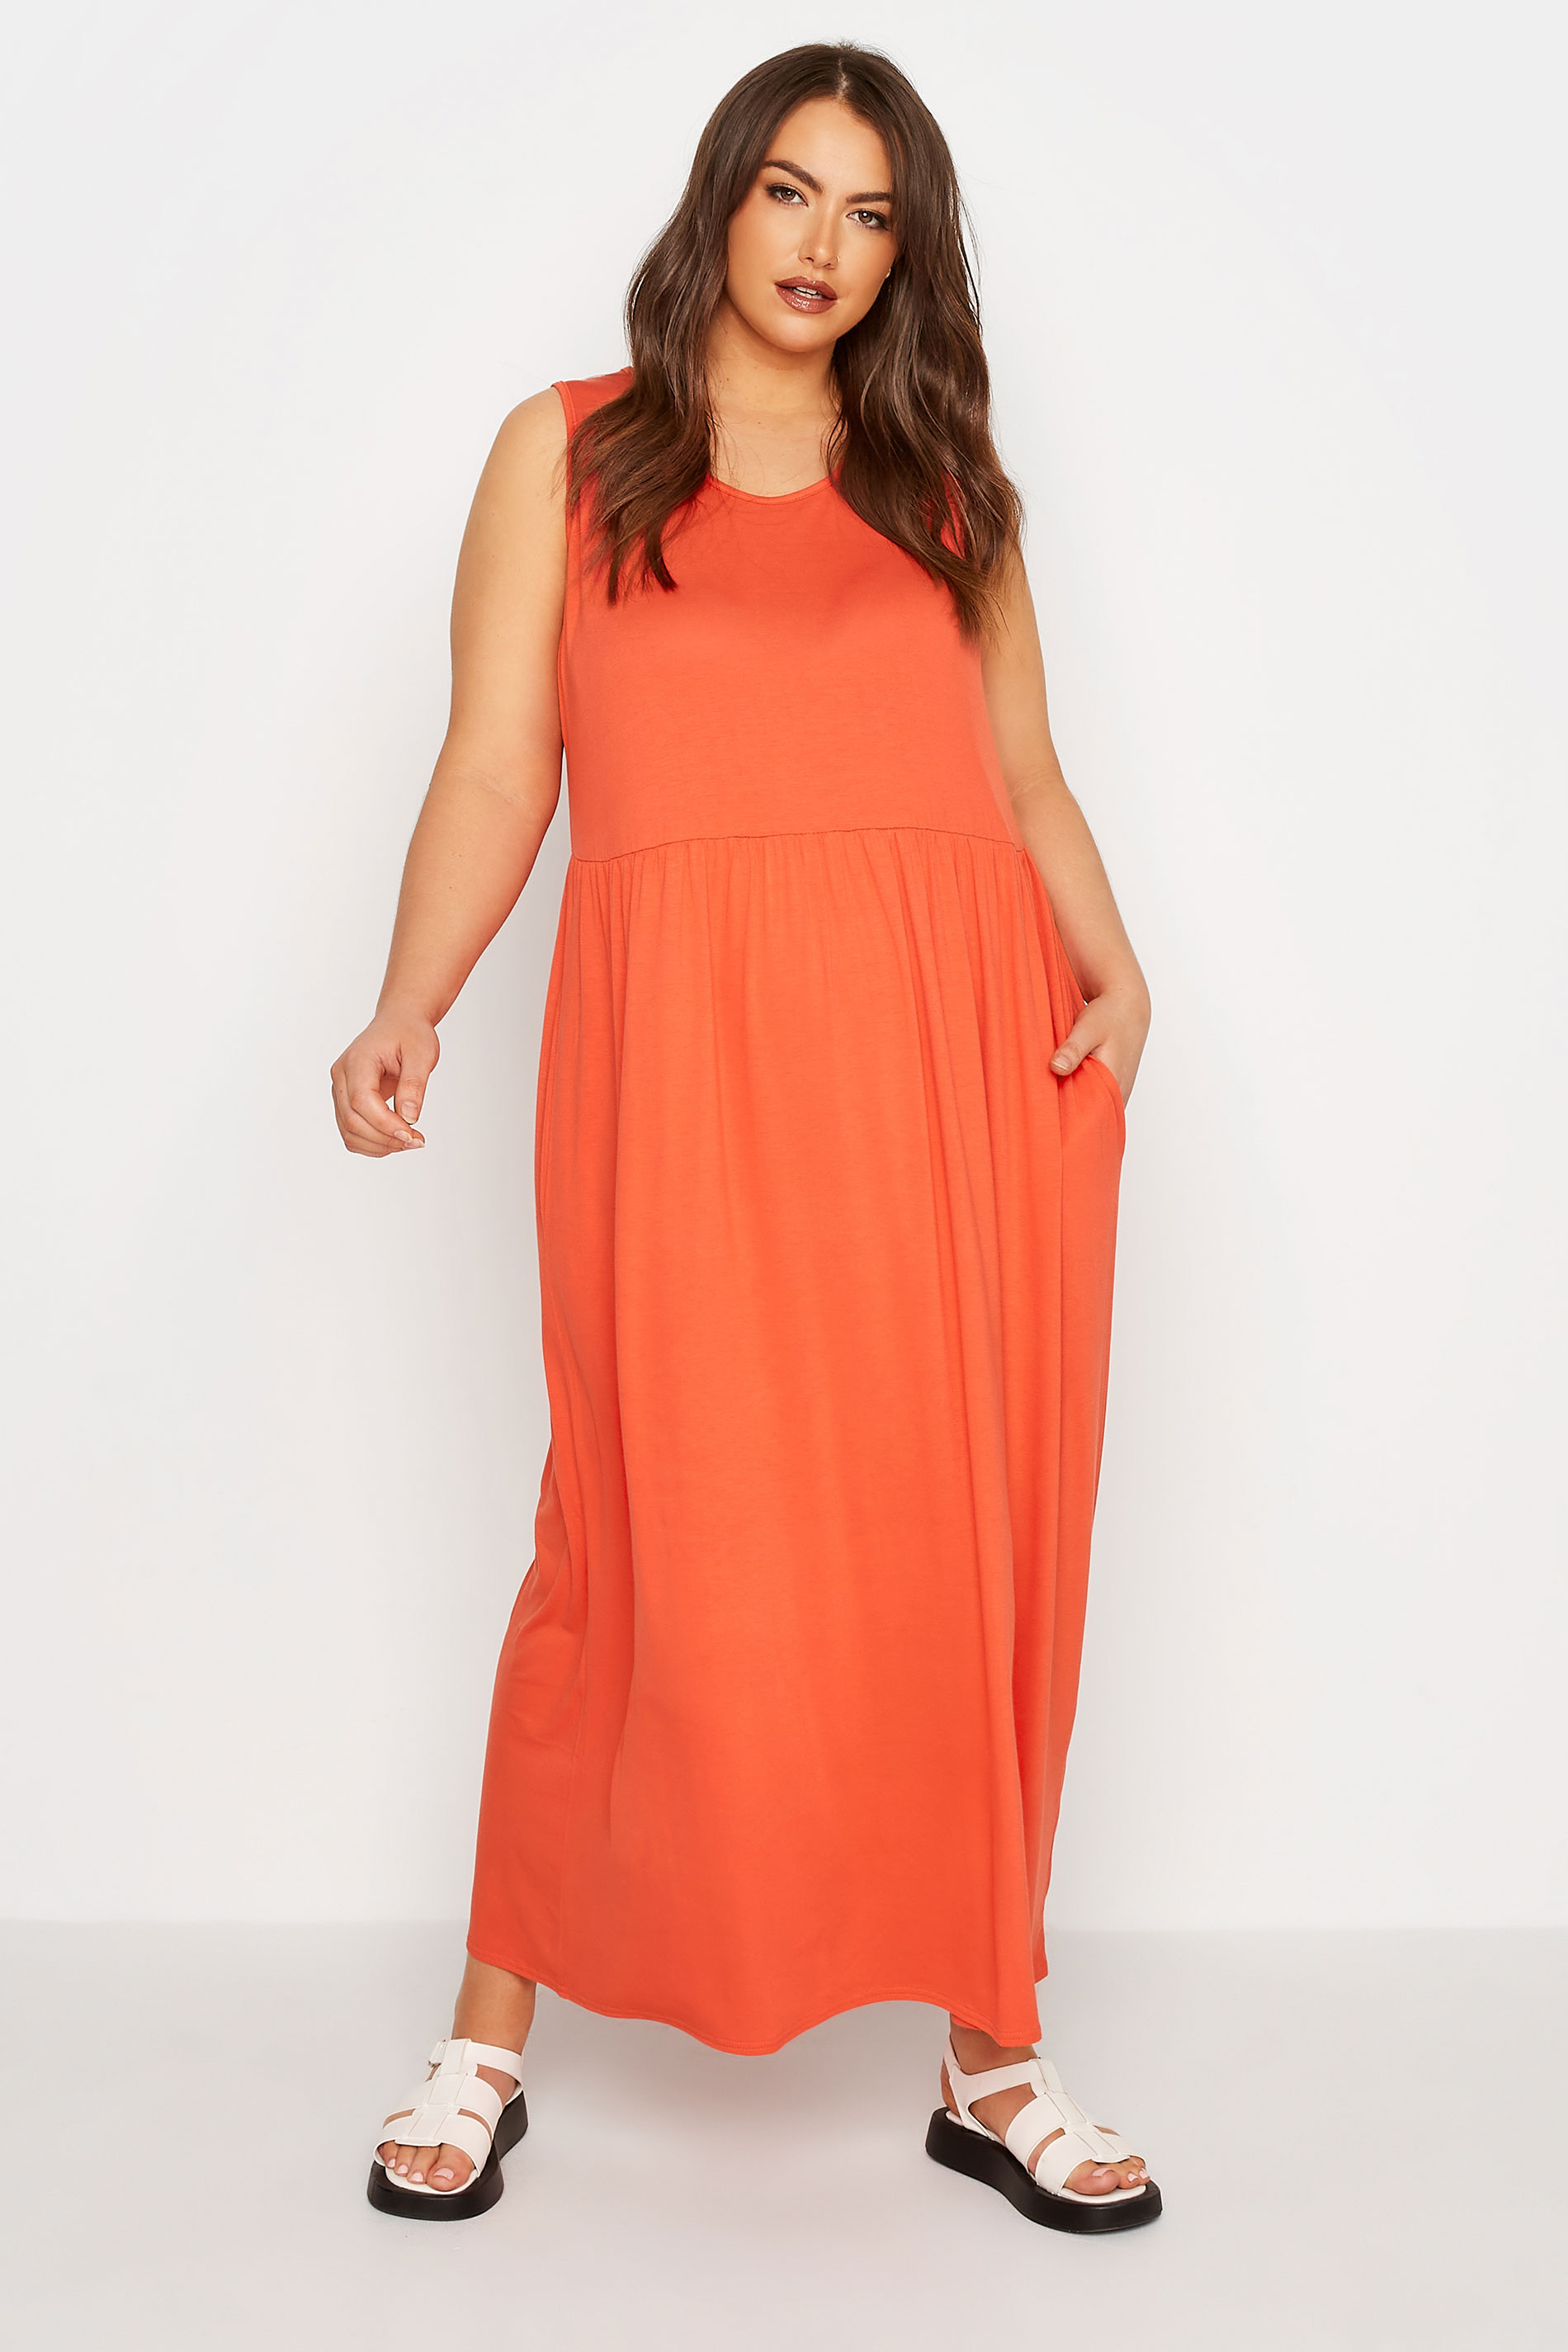 LIMITED COLLECTION Curve Orange Sleeveless Pocket Maxi Dress_A.jpg